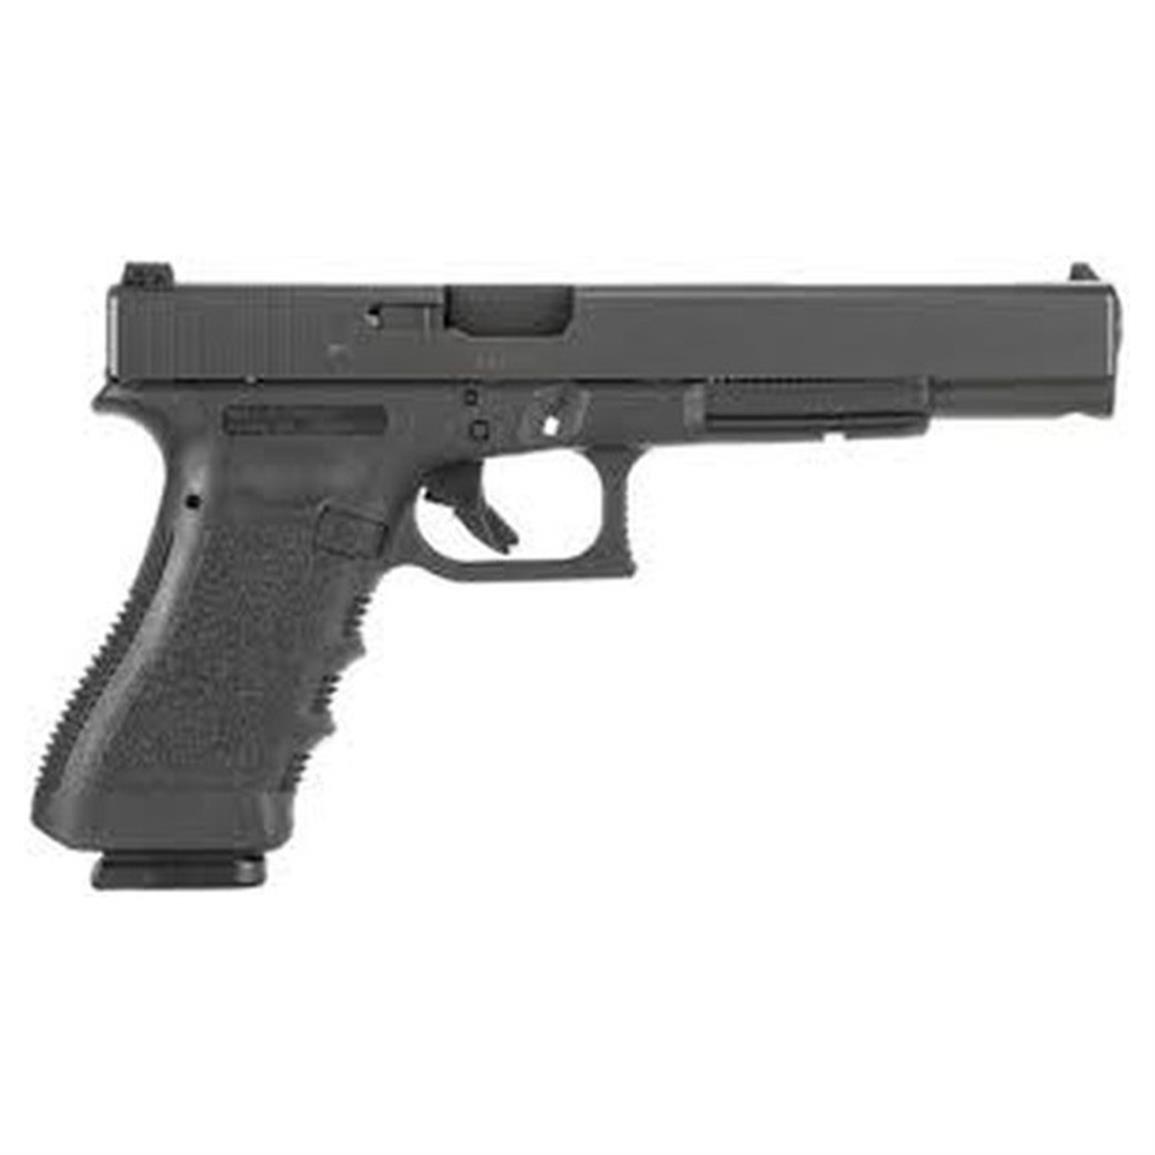 Glock 17L, Semi-automatic, 9mm, PI1630103, 764503301162, 6.02 inch Barrel